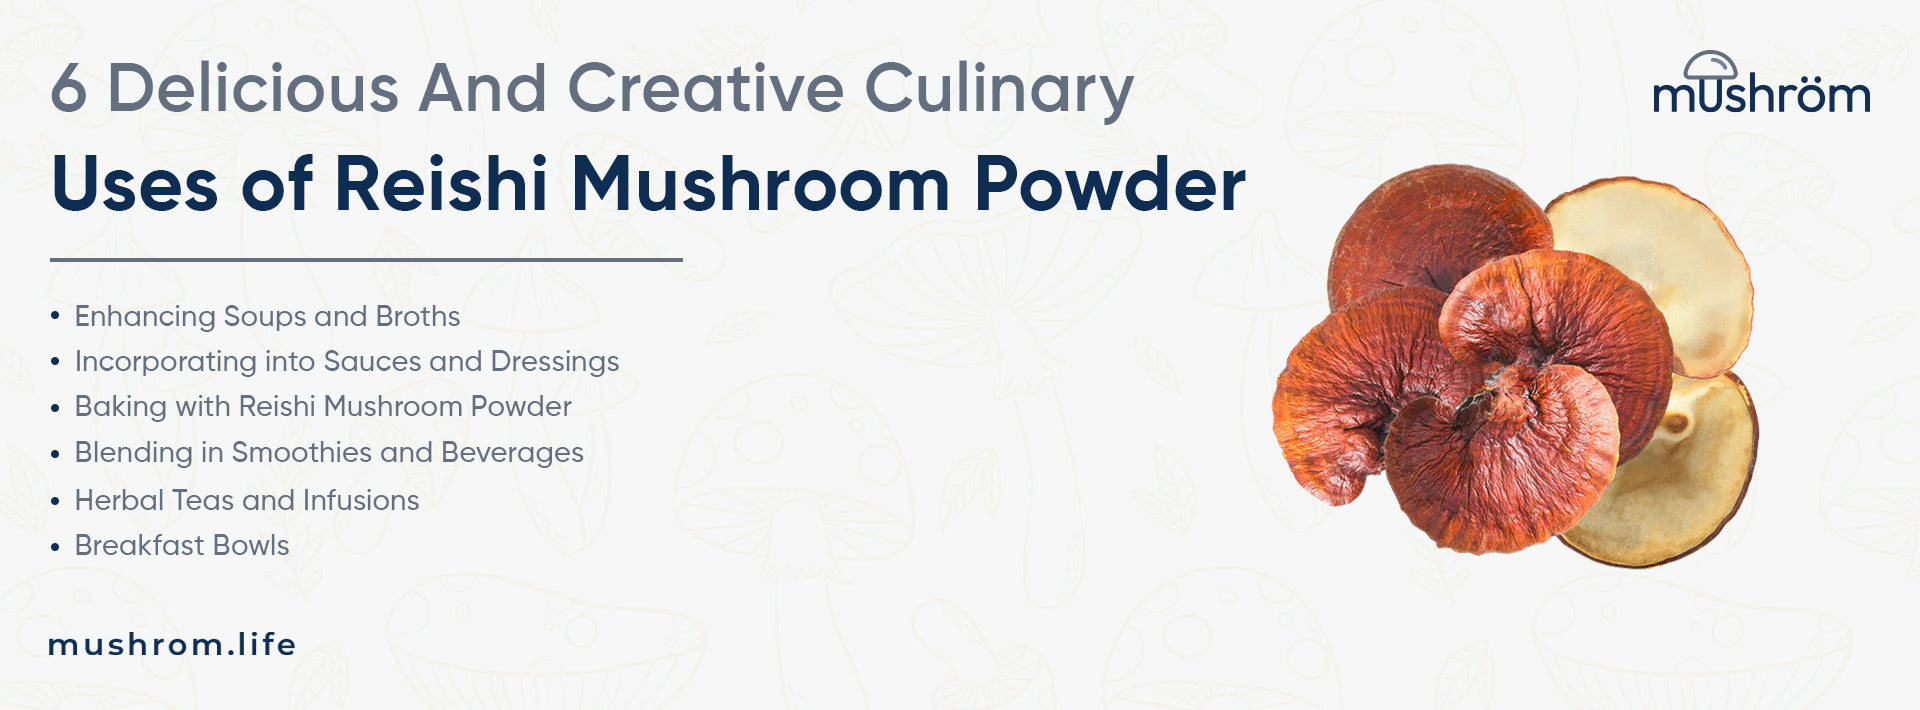 6 Delicious And Creative Culinary Uses Of Reishi Mushroom Powder